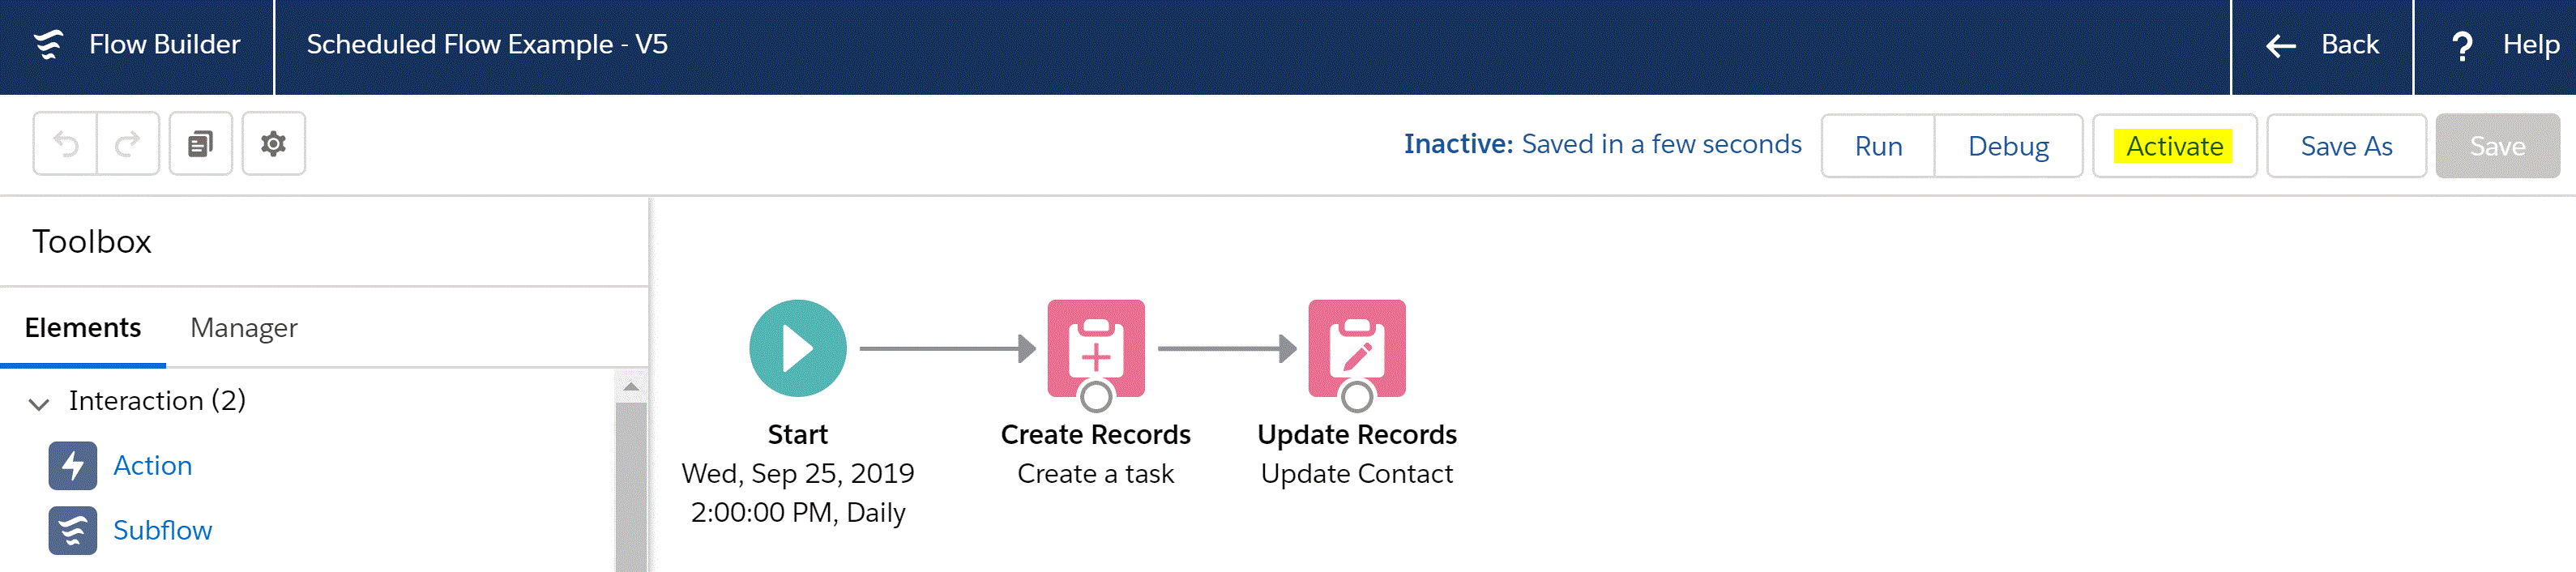 ScheduledFlowExample-Activate.GIF